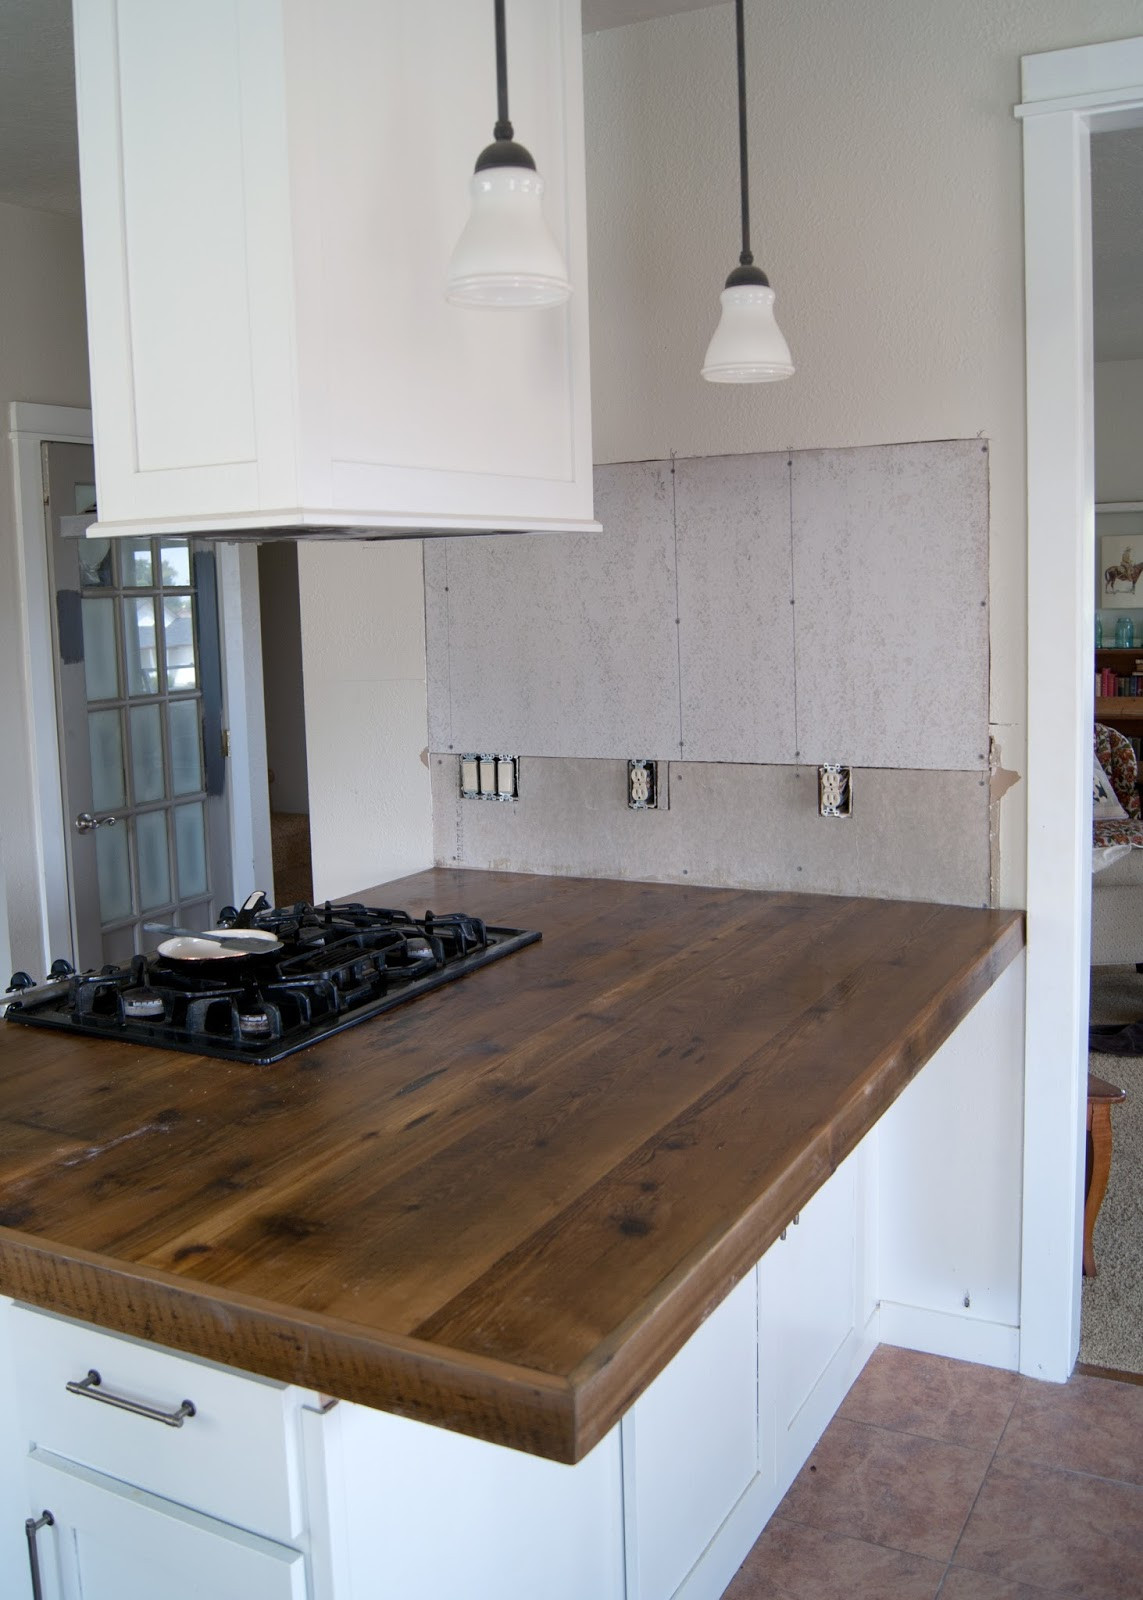 Diy Wood Kitchen Countertops
 15 Amazing DIY Kitchen Countertop Ideas